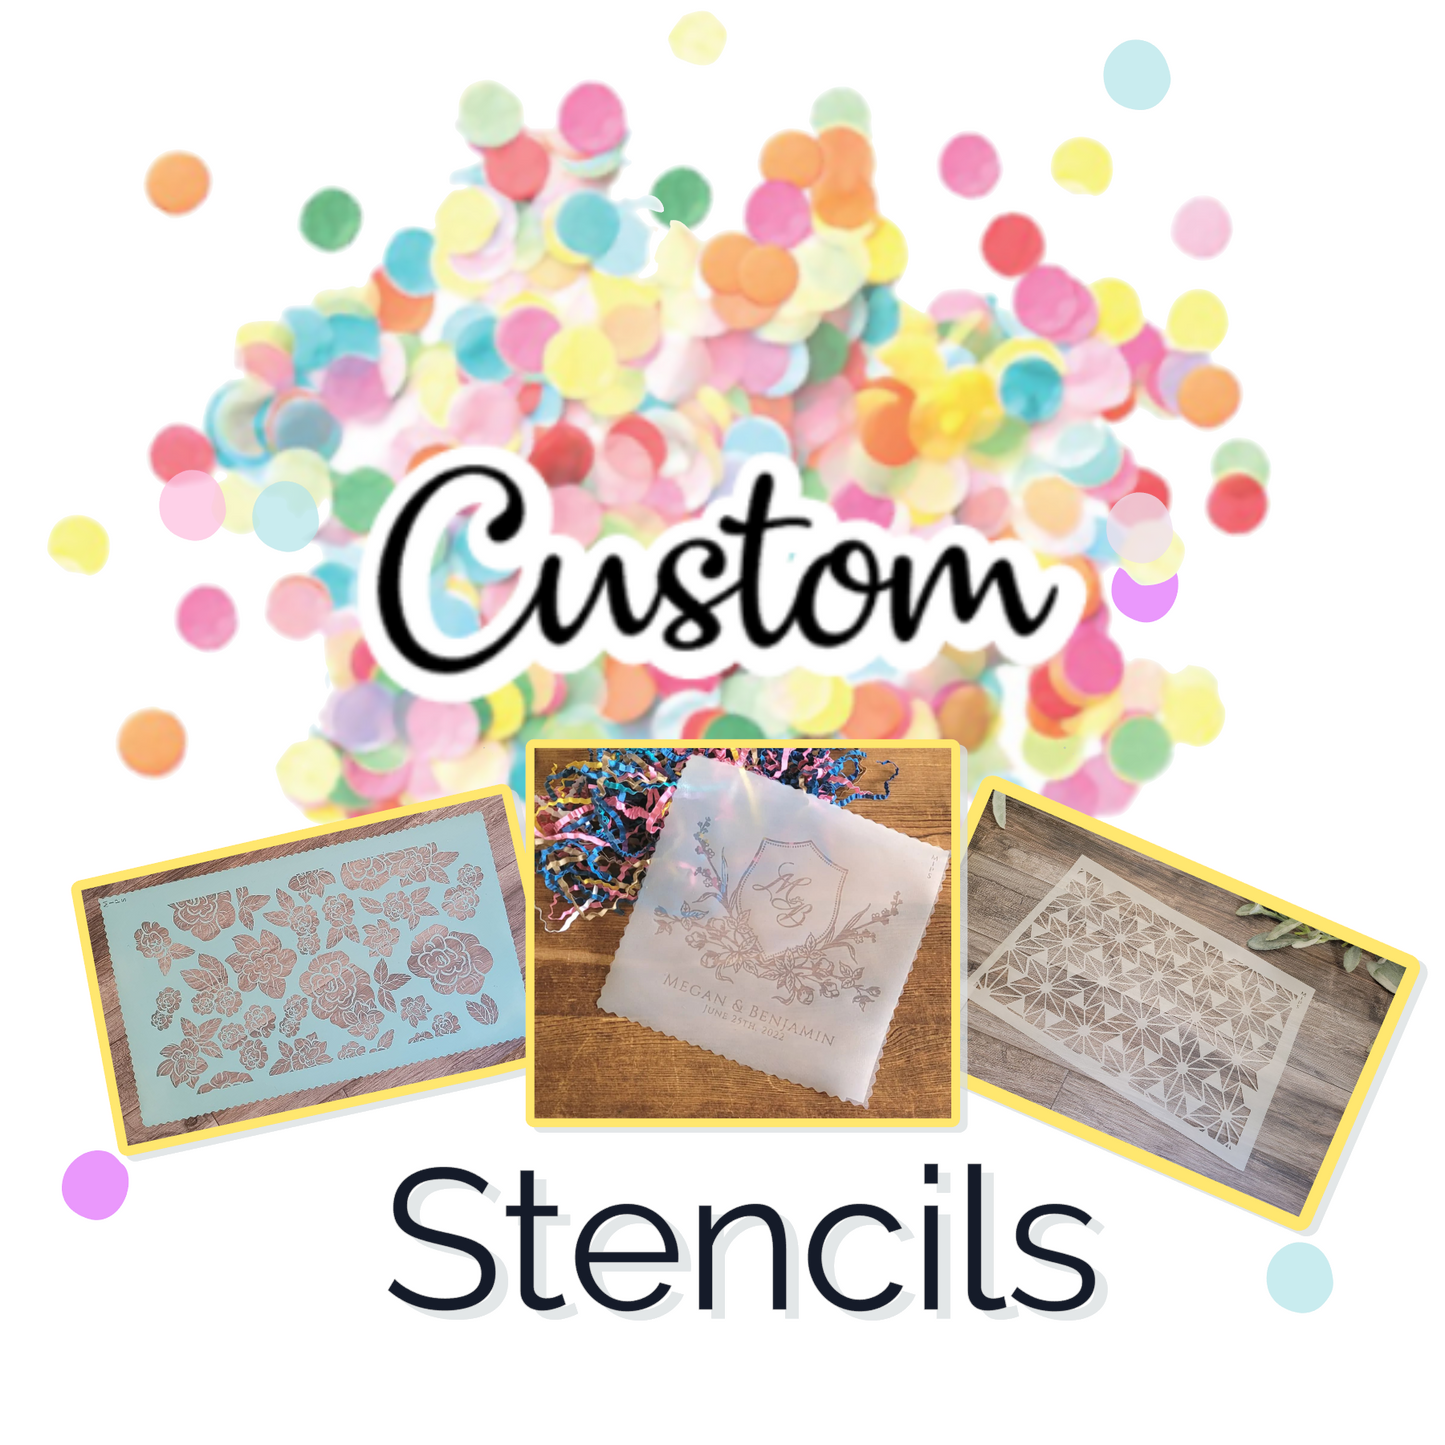 Custom Stencils - The Stencil Place